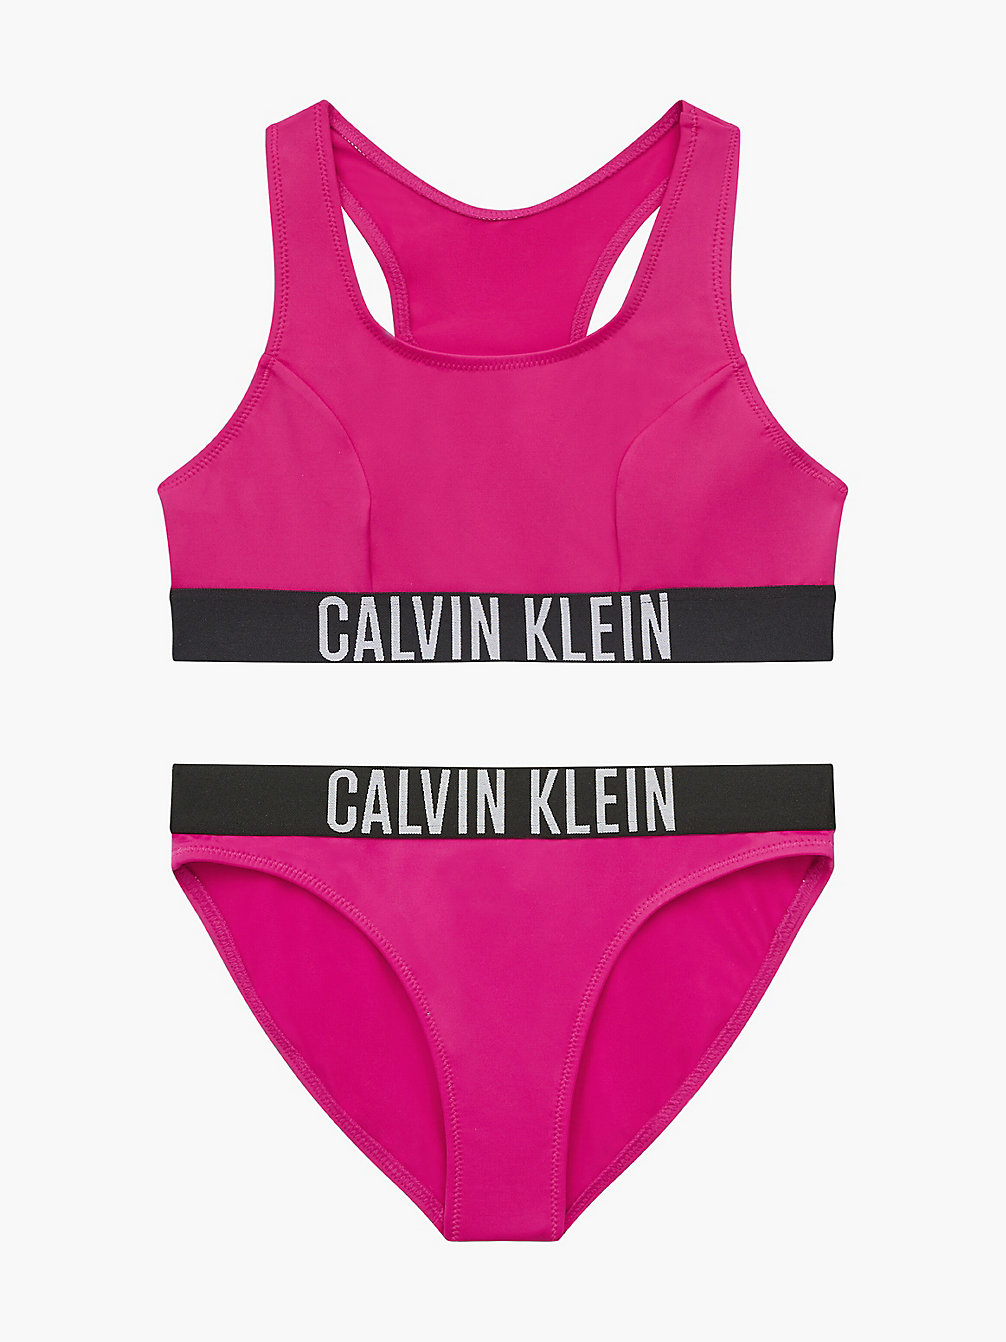 ROYAL PINK Girls Bralette Bikini Set - Intense Power undefined girls Calvin Klein